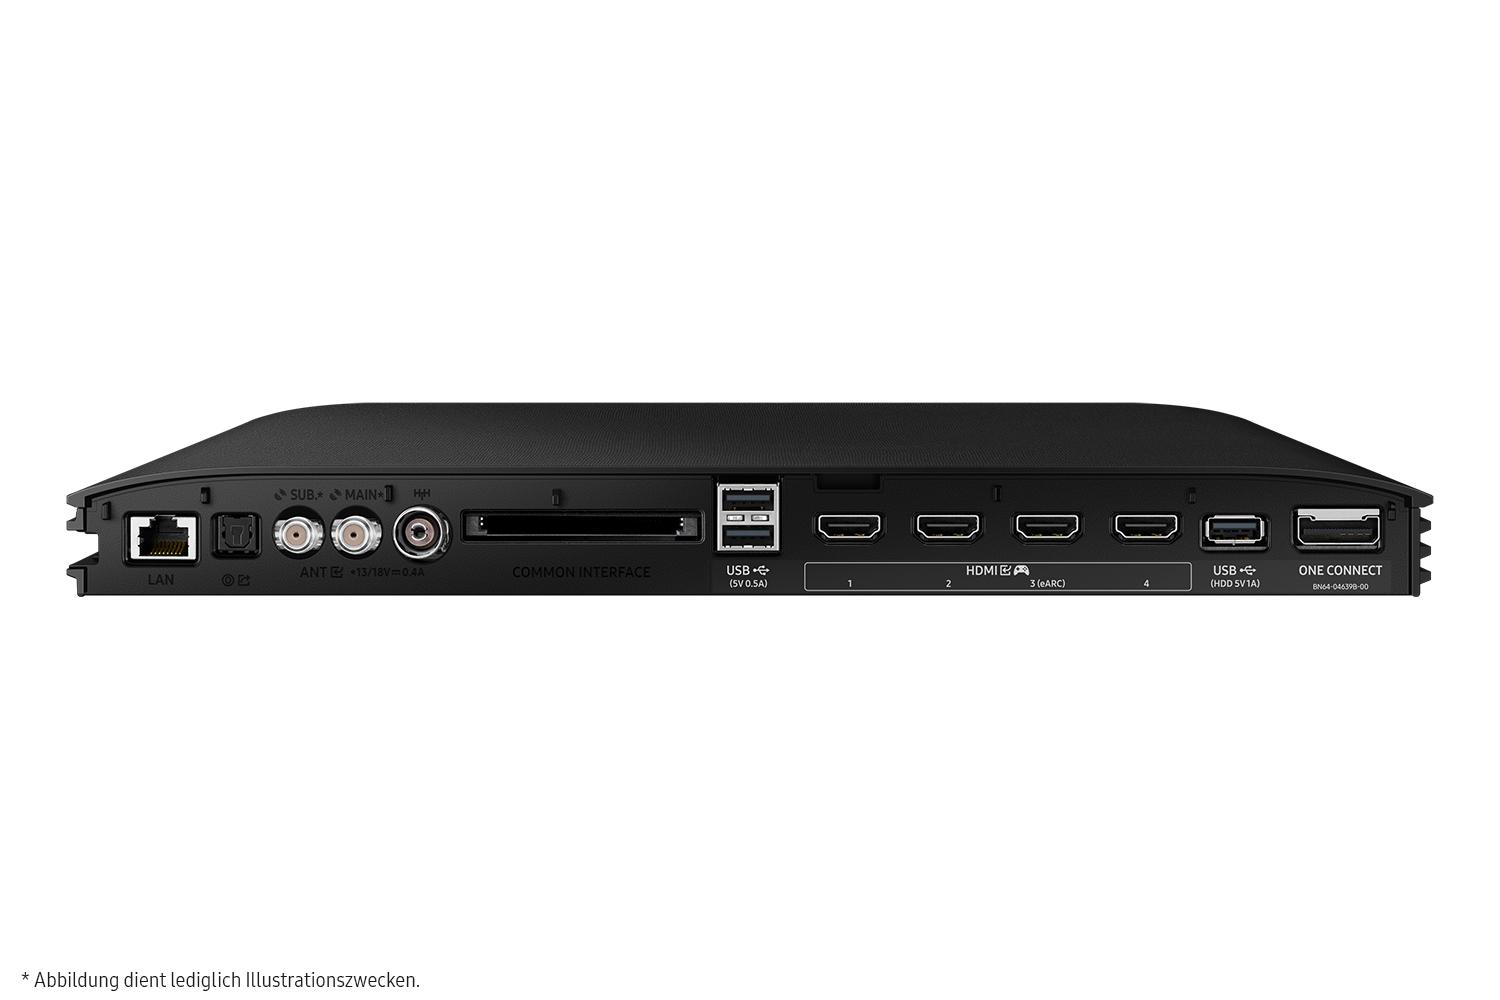 SAMSUNG GQ75QN900C Neo QLED TV 189 75 TV, Zoll 8K, (Flat, Tizen) cm, SMART / UHD